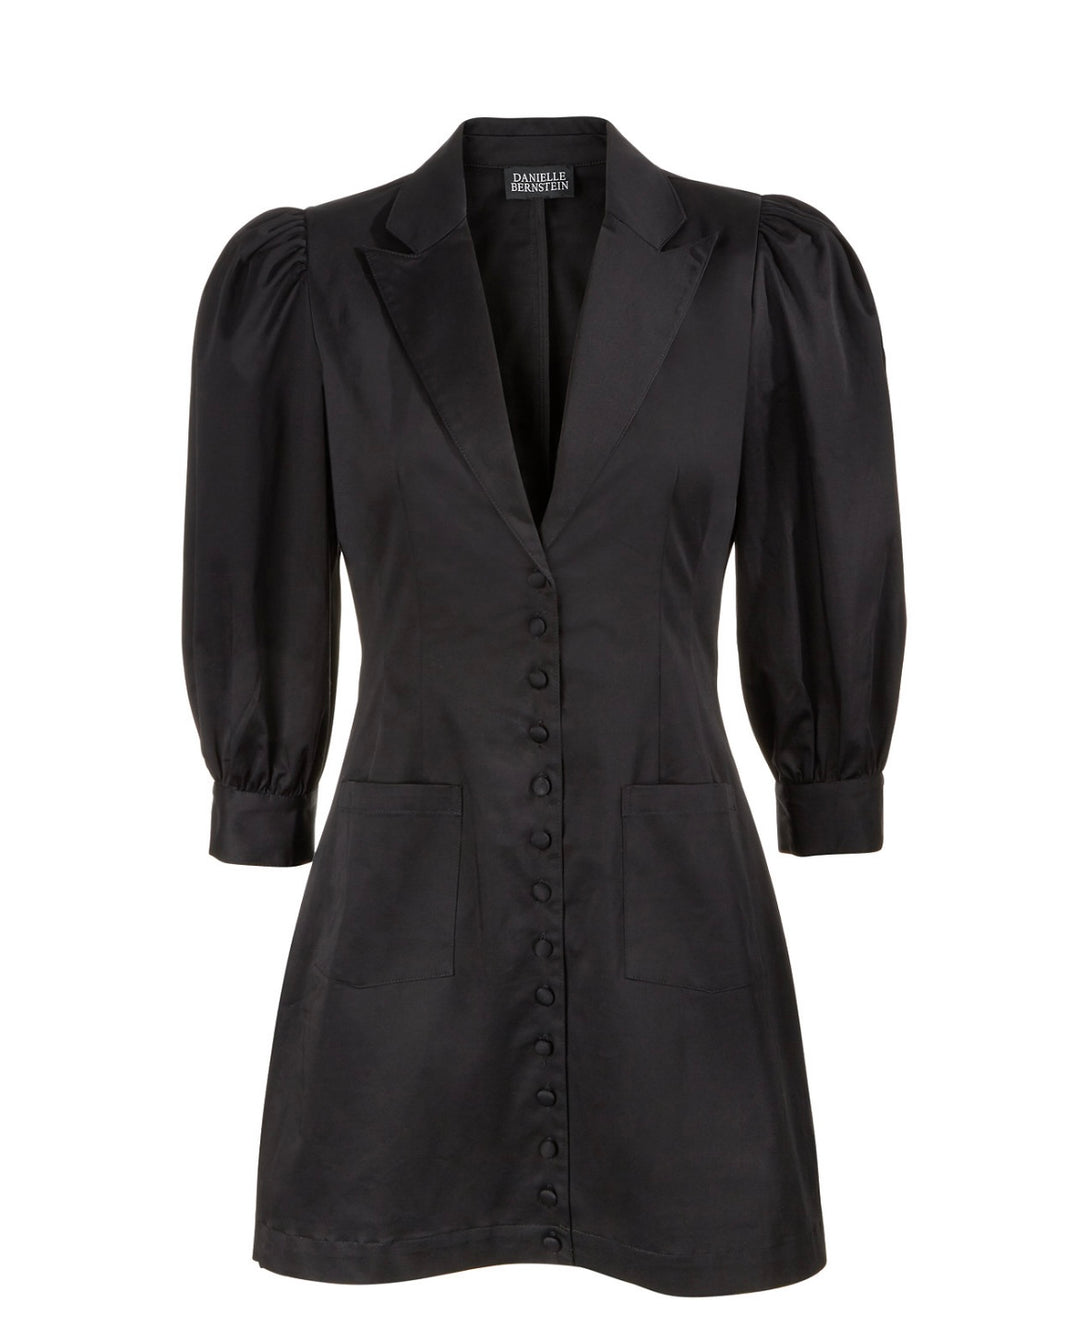 Danielle Bernstein Women's Puff Short Sleeve Mini Dress Black